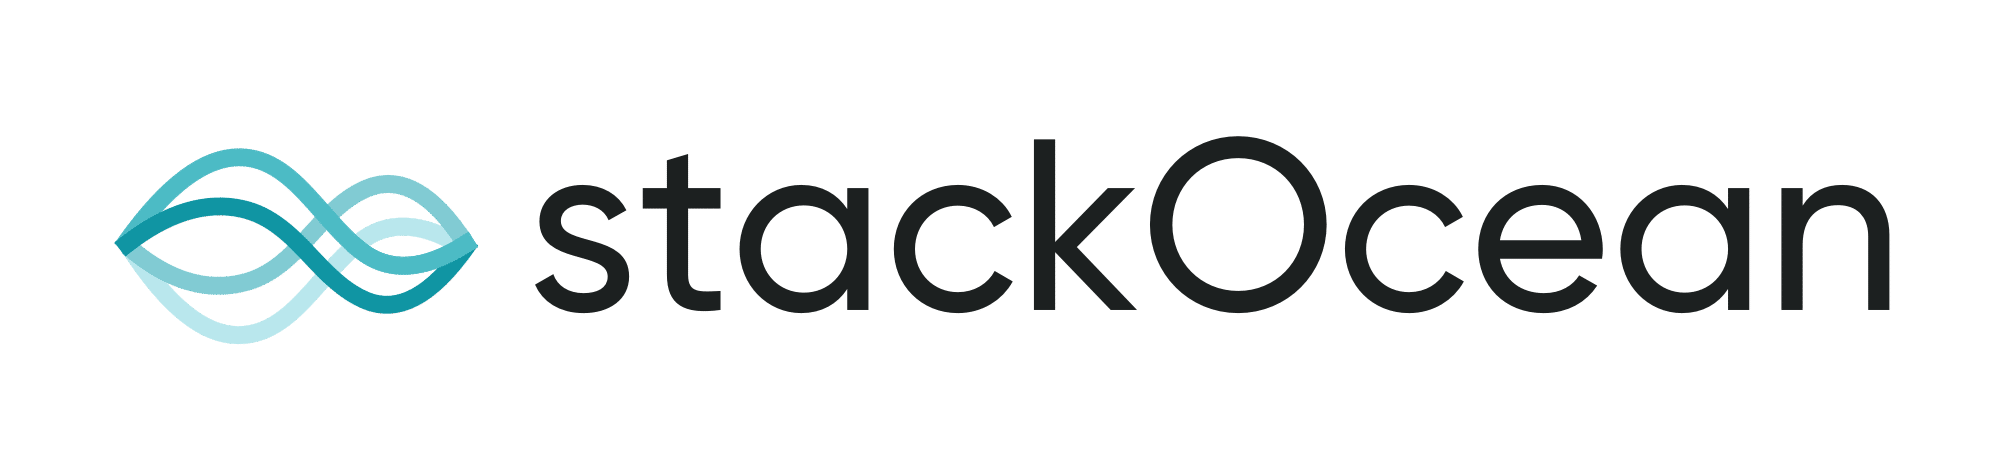 stackocean-logo-dark